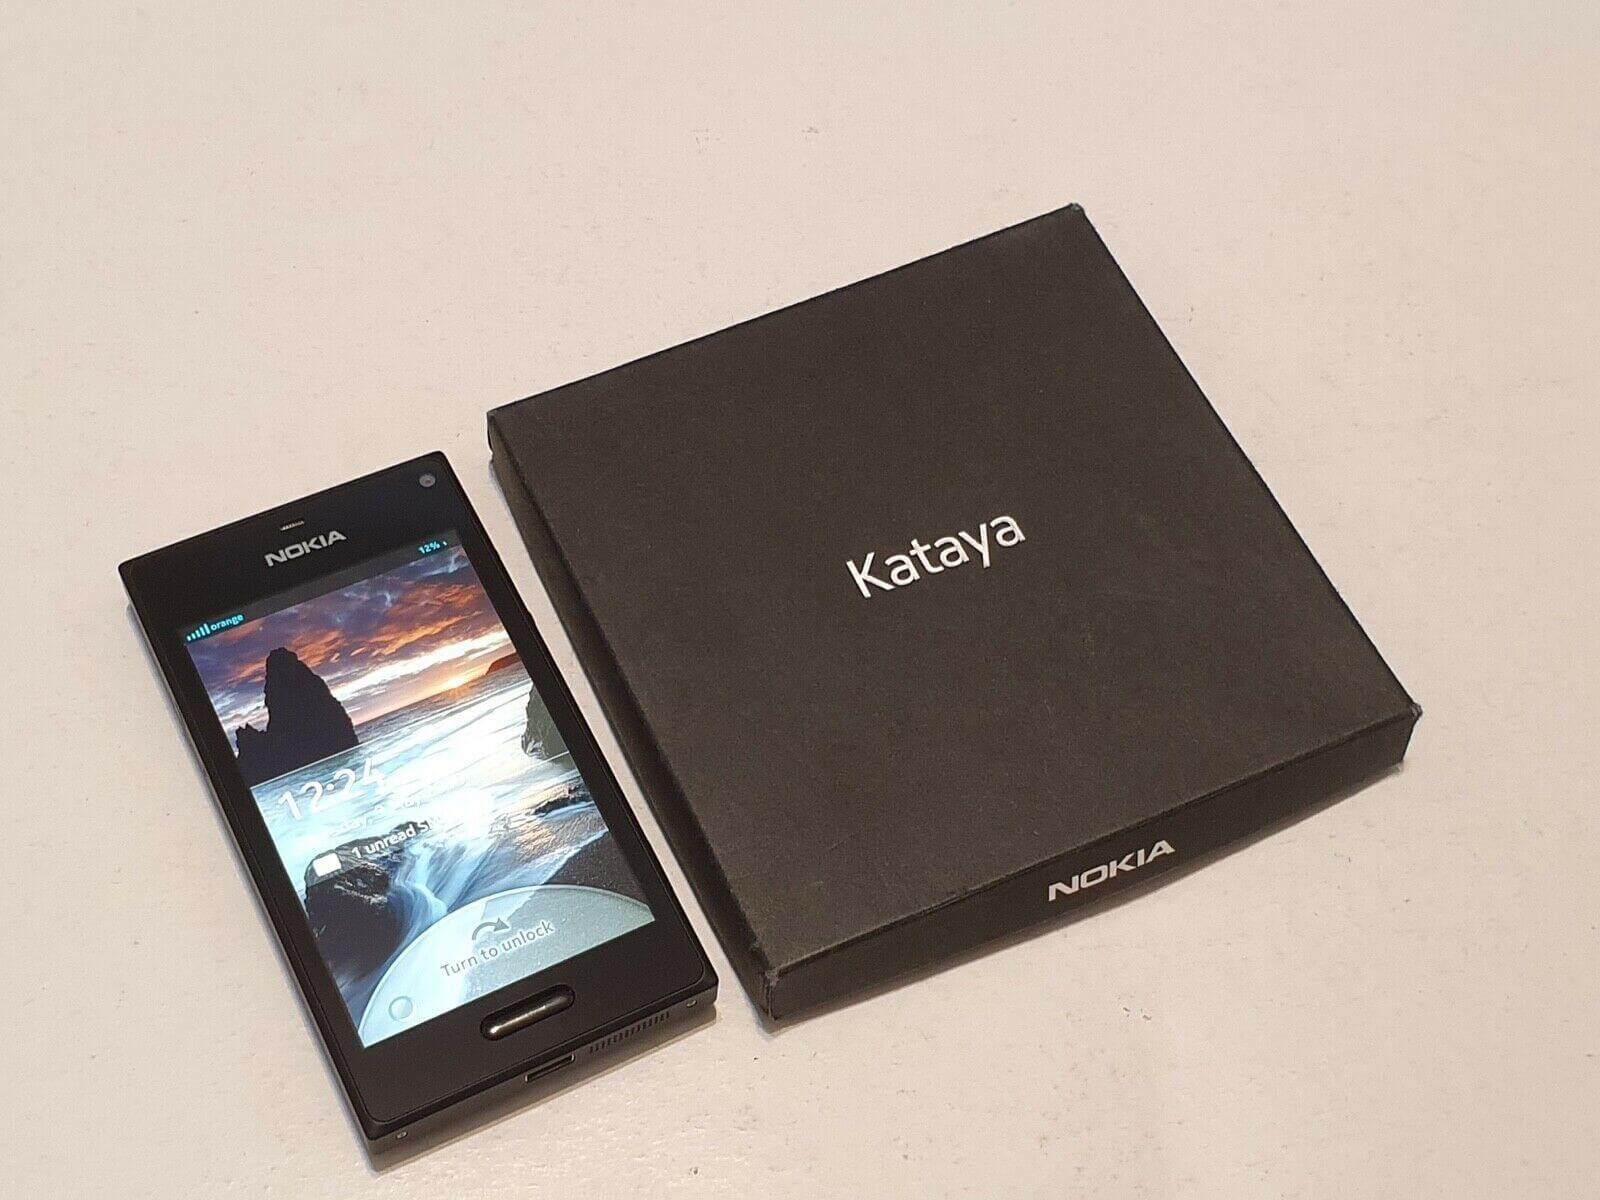 Nokia Kataya